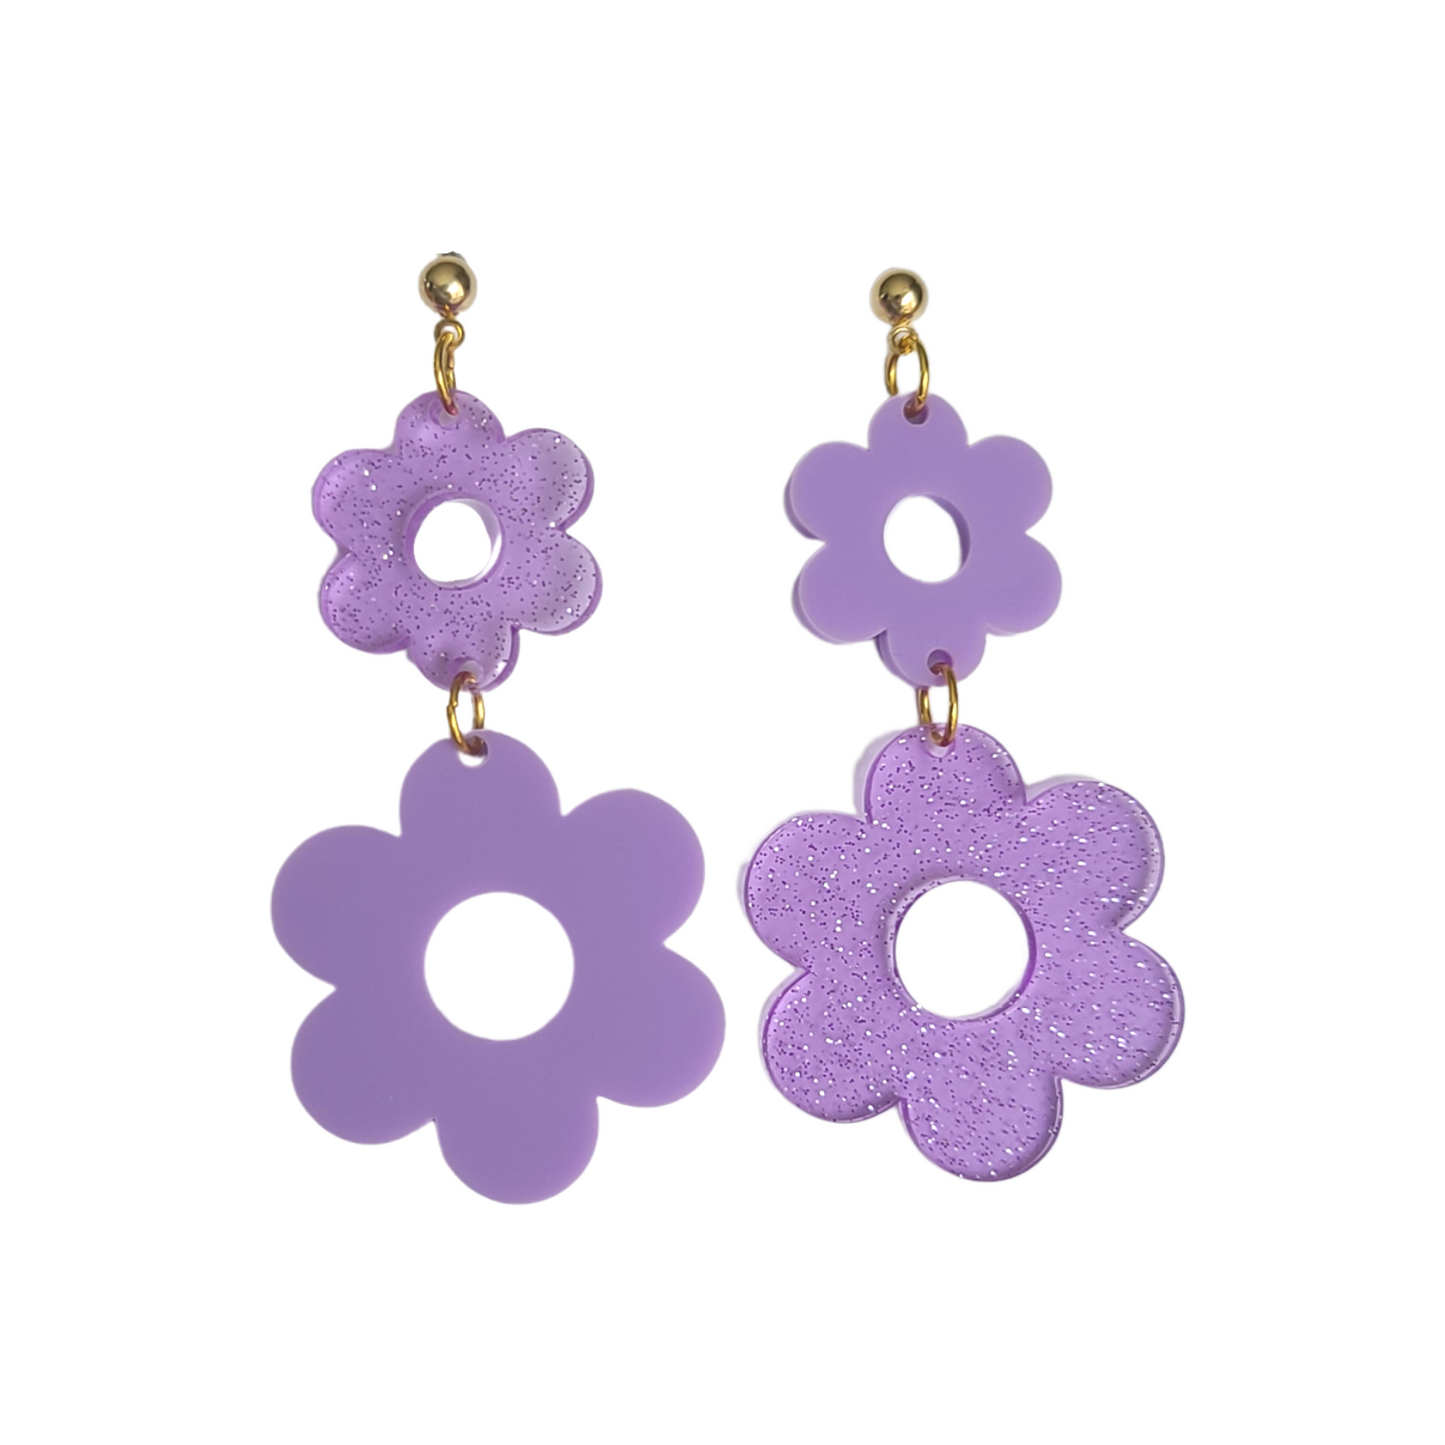 Double Flowers Pastel Lavender with Jelly Glitter - Earrings - Laser Cut Acrylic